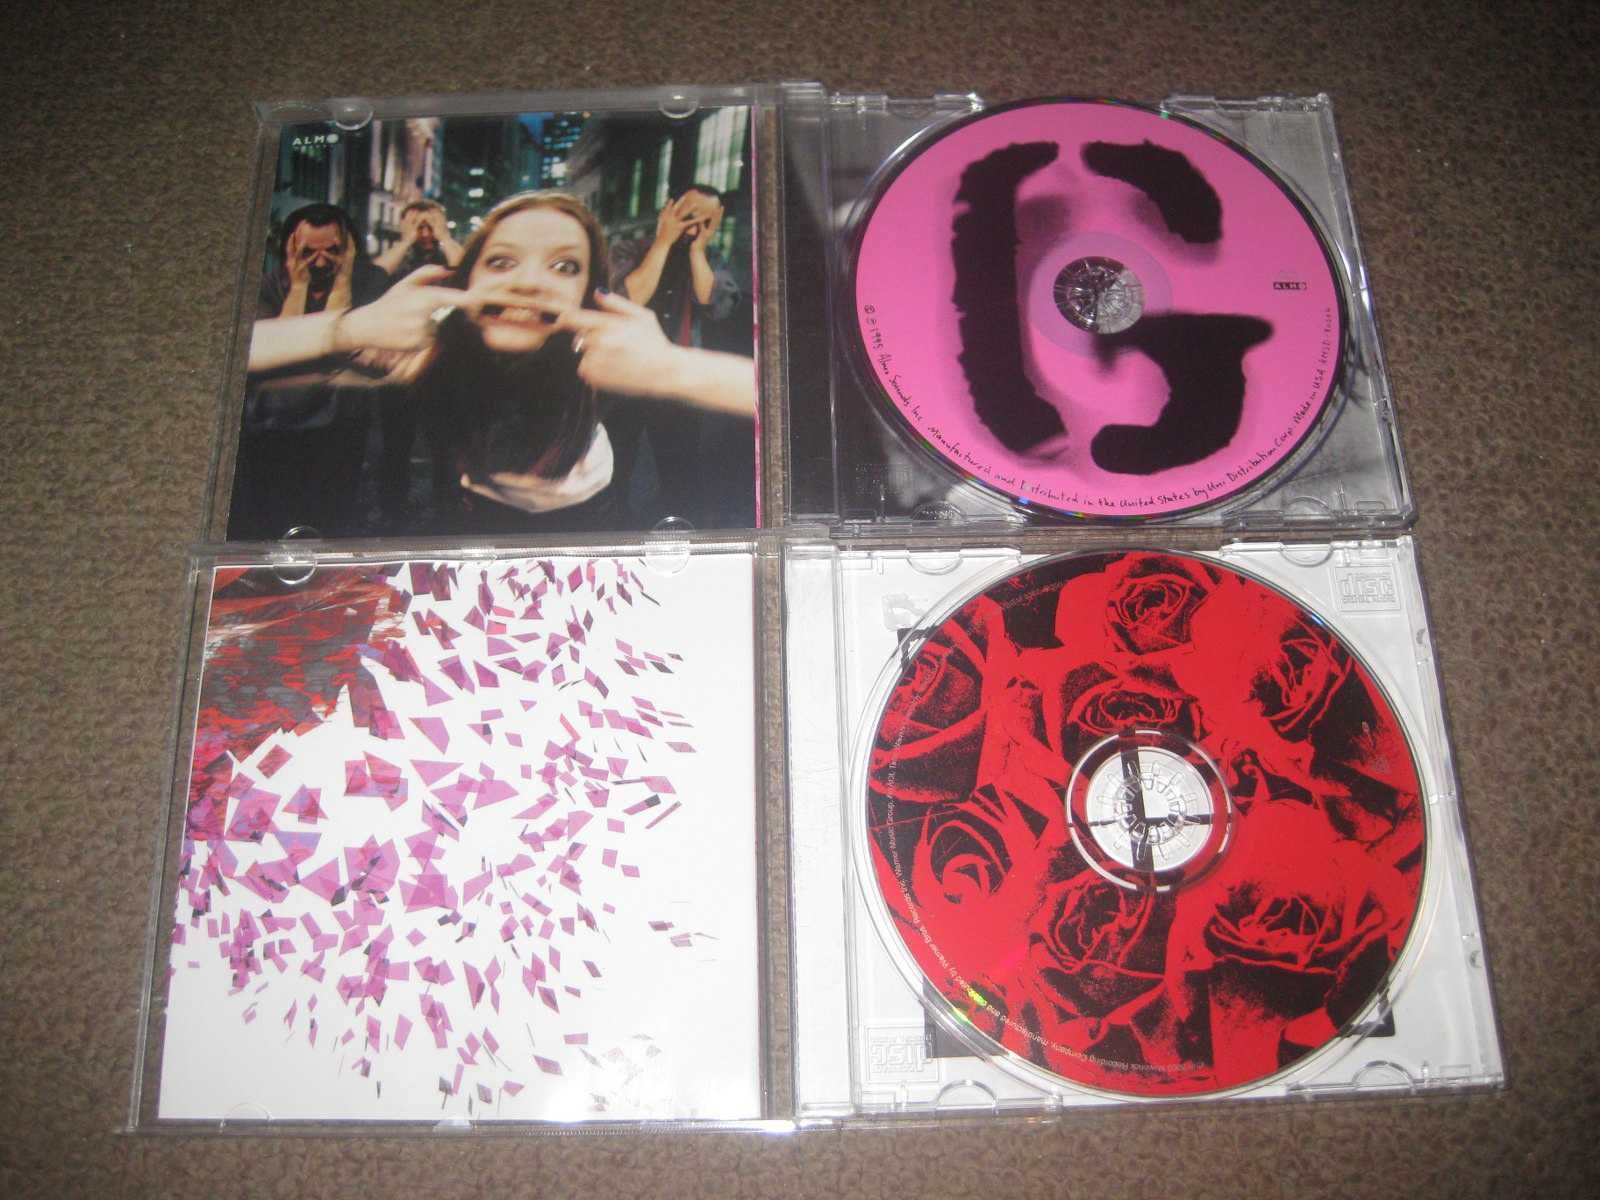 2 CDs dos "Garbage" Portes Grátis!